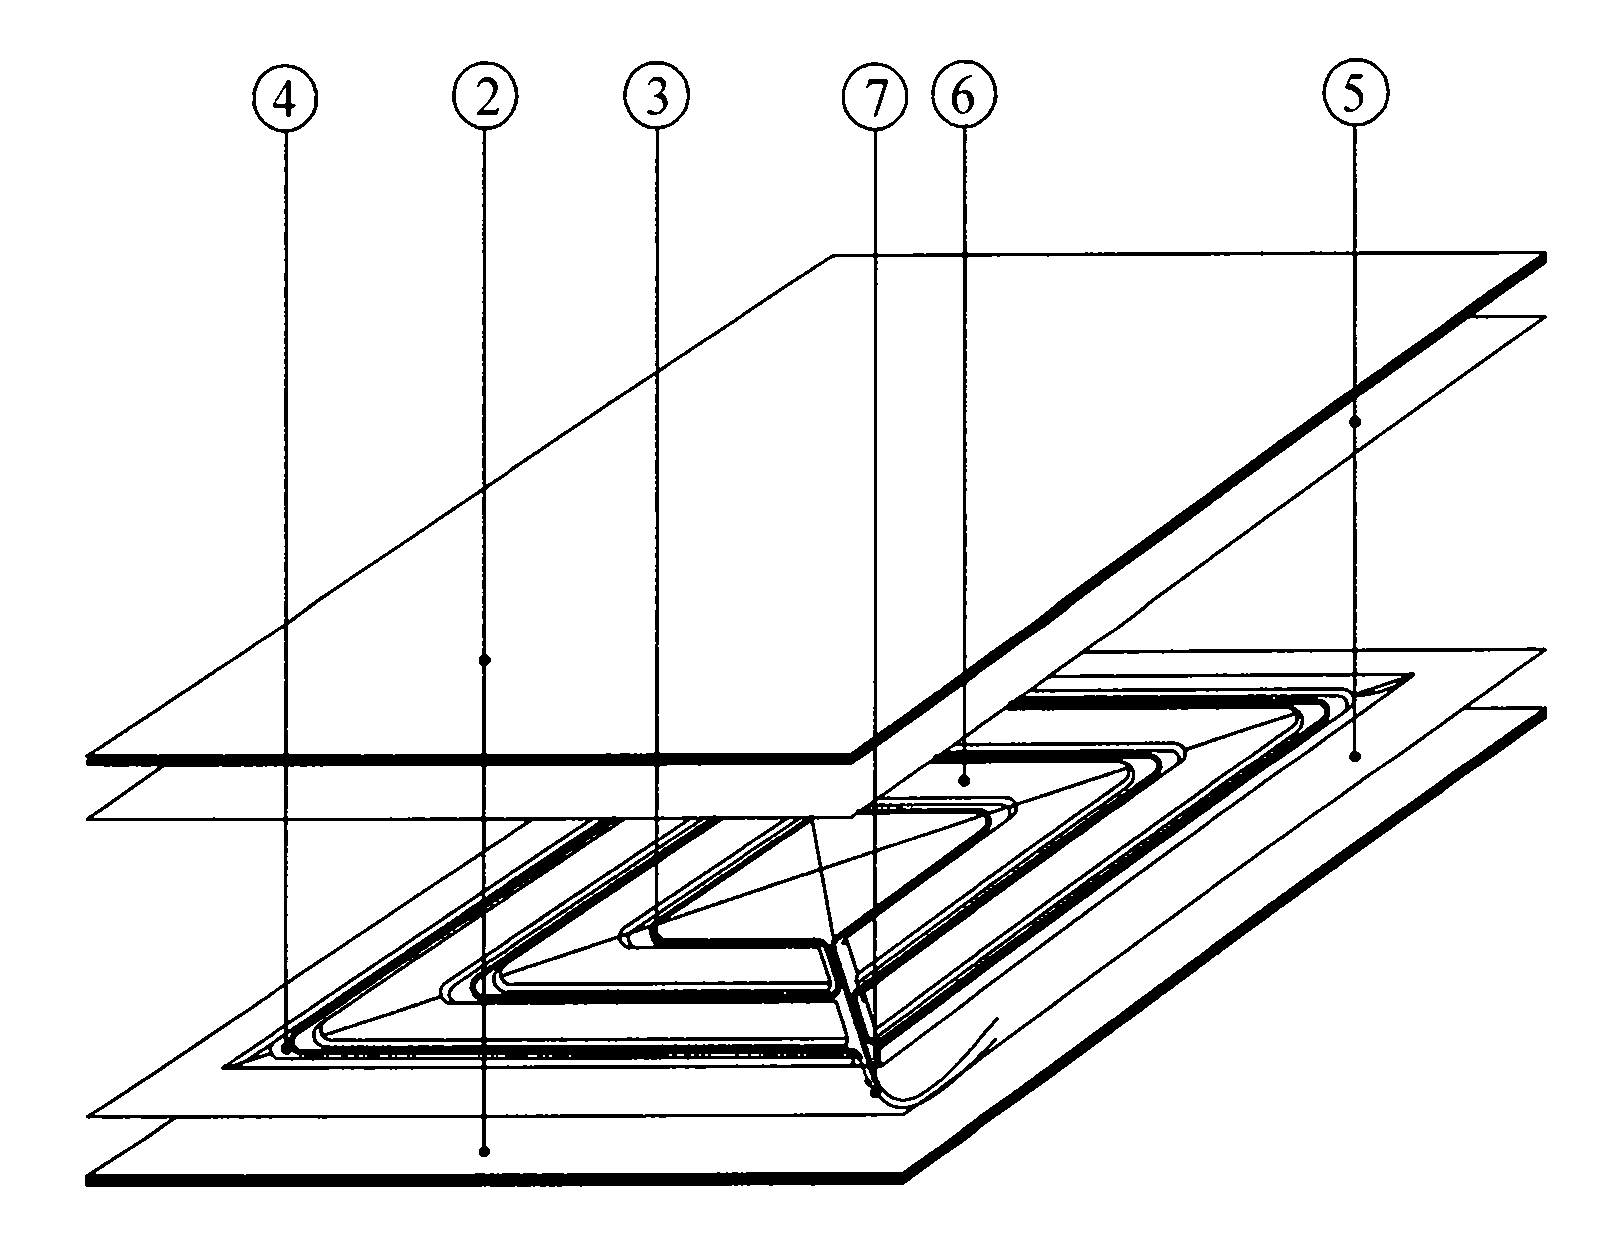 Spontaneous-heating plate